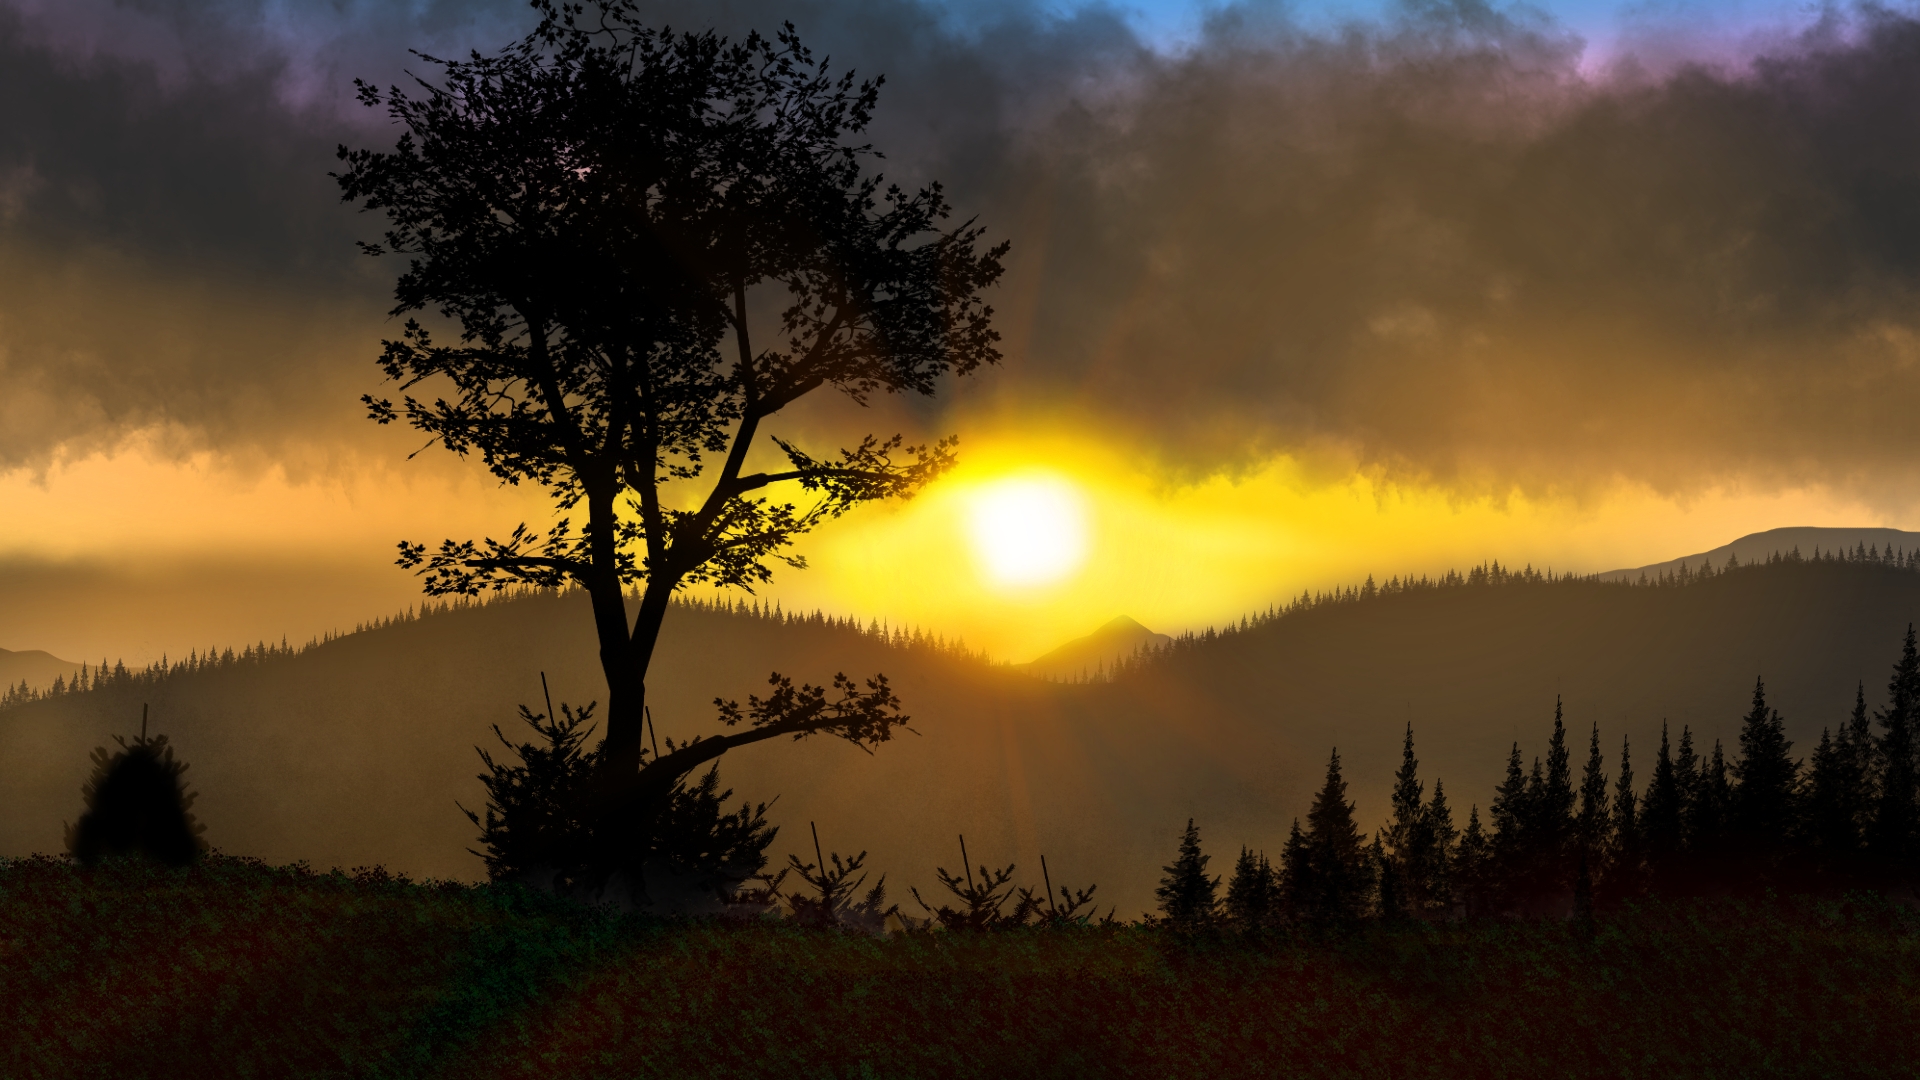 Digital Painting Digital Art Nature Landscape Sunset Trees 1920x1080